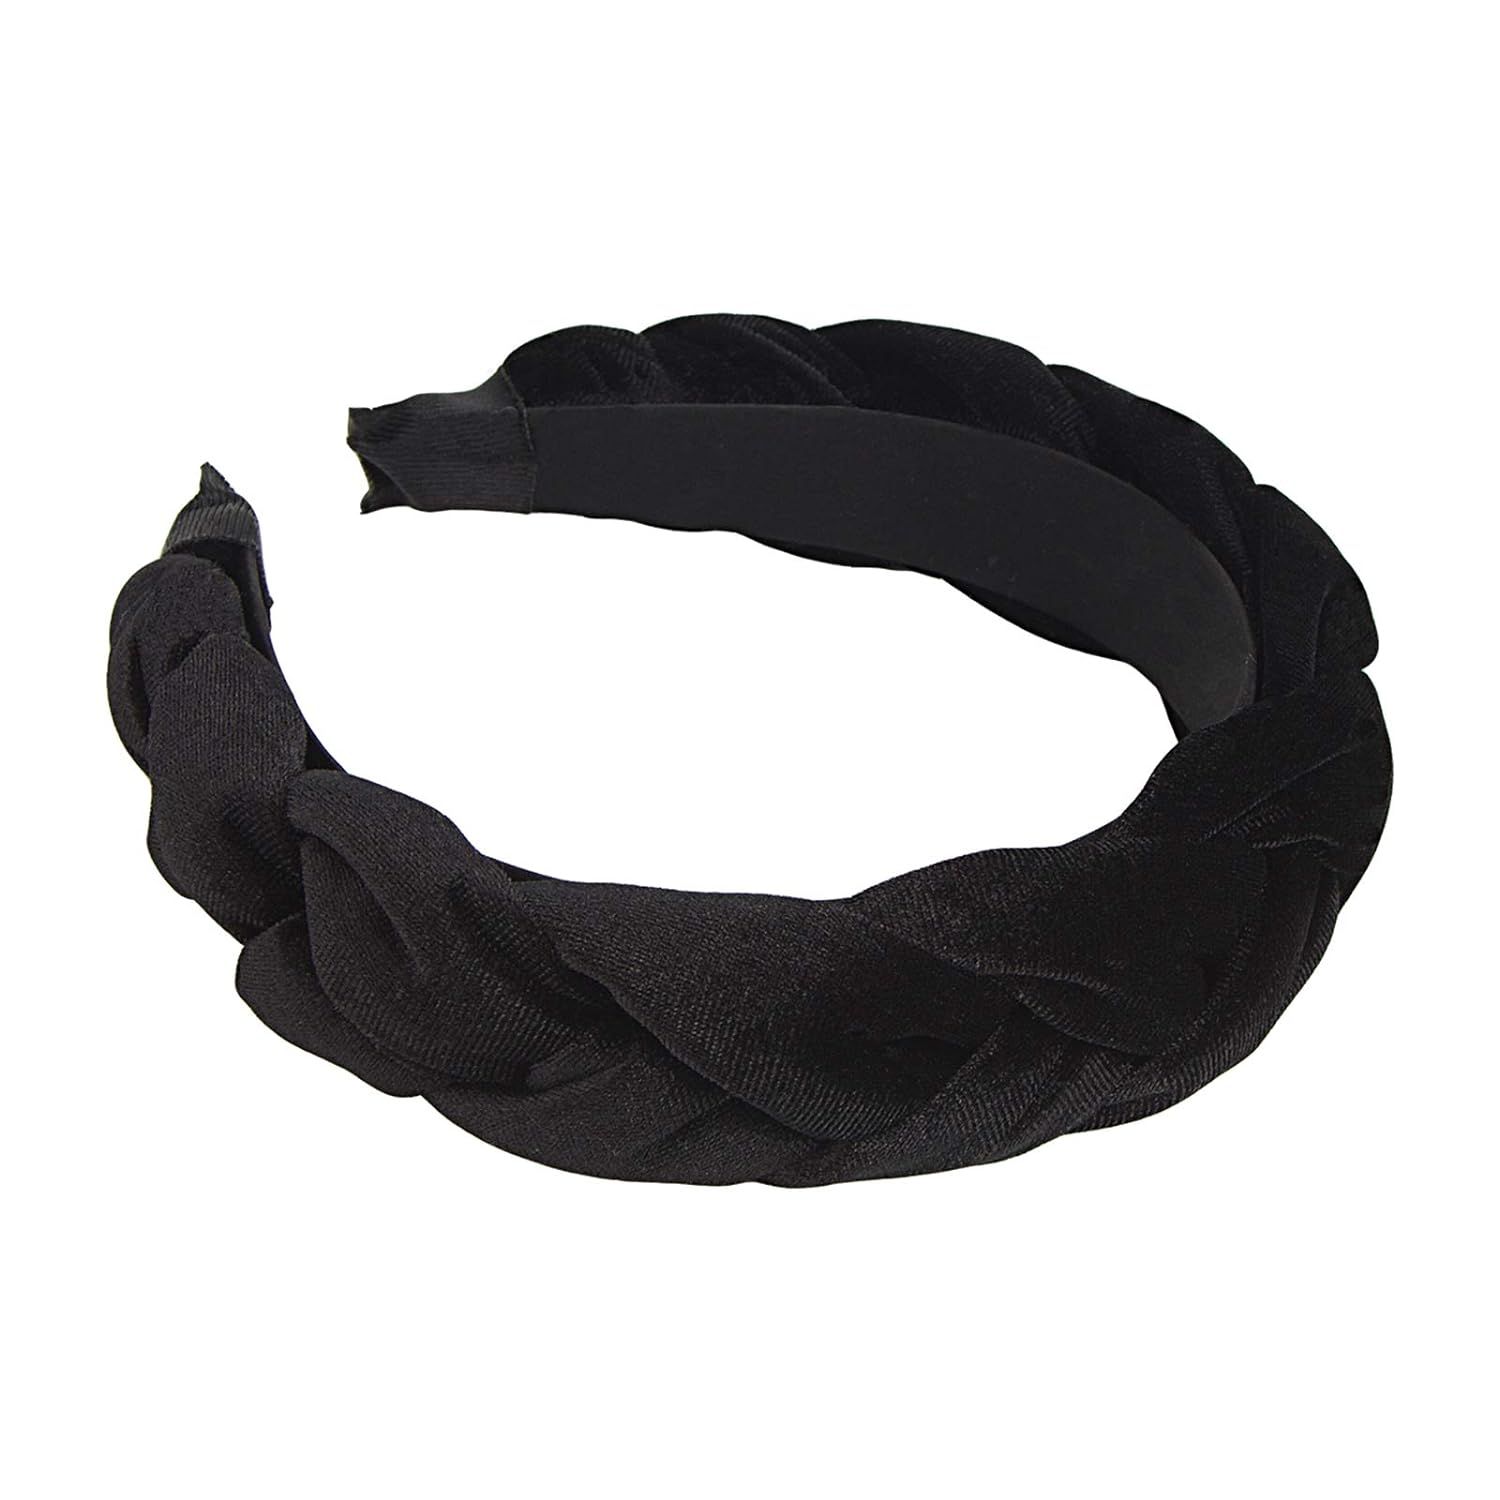 RINVEE Headbands for Women Velvet Braided Headbands Fashion Hairband Criss Cross Hair Accessories... | Amazon (US)